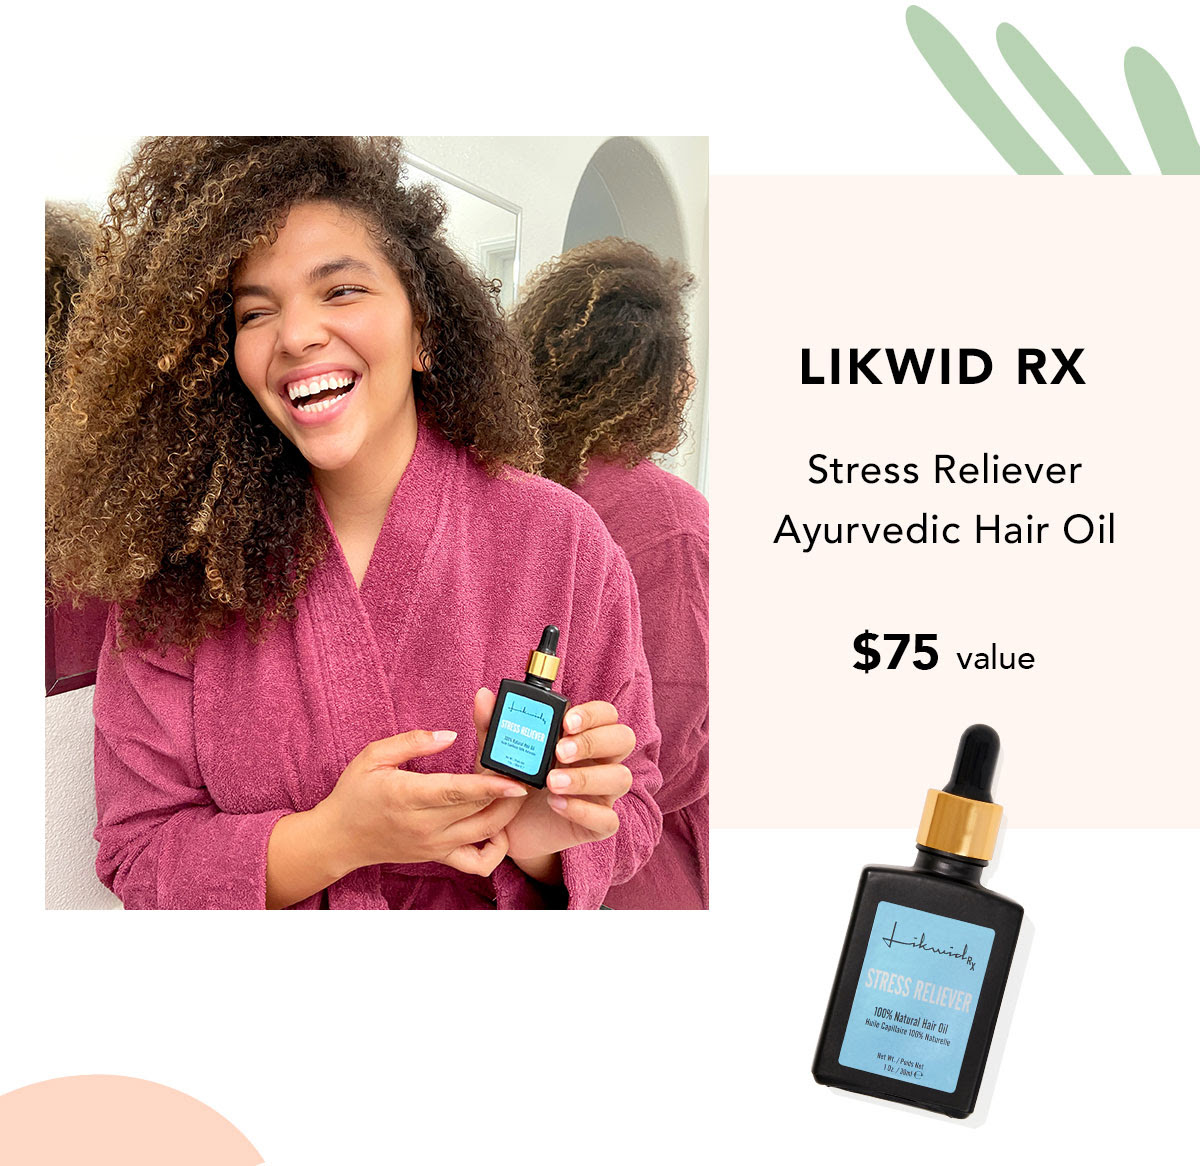 Likwid Rx Stress Reliever Ayurvedic Hair Oil $75 value